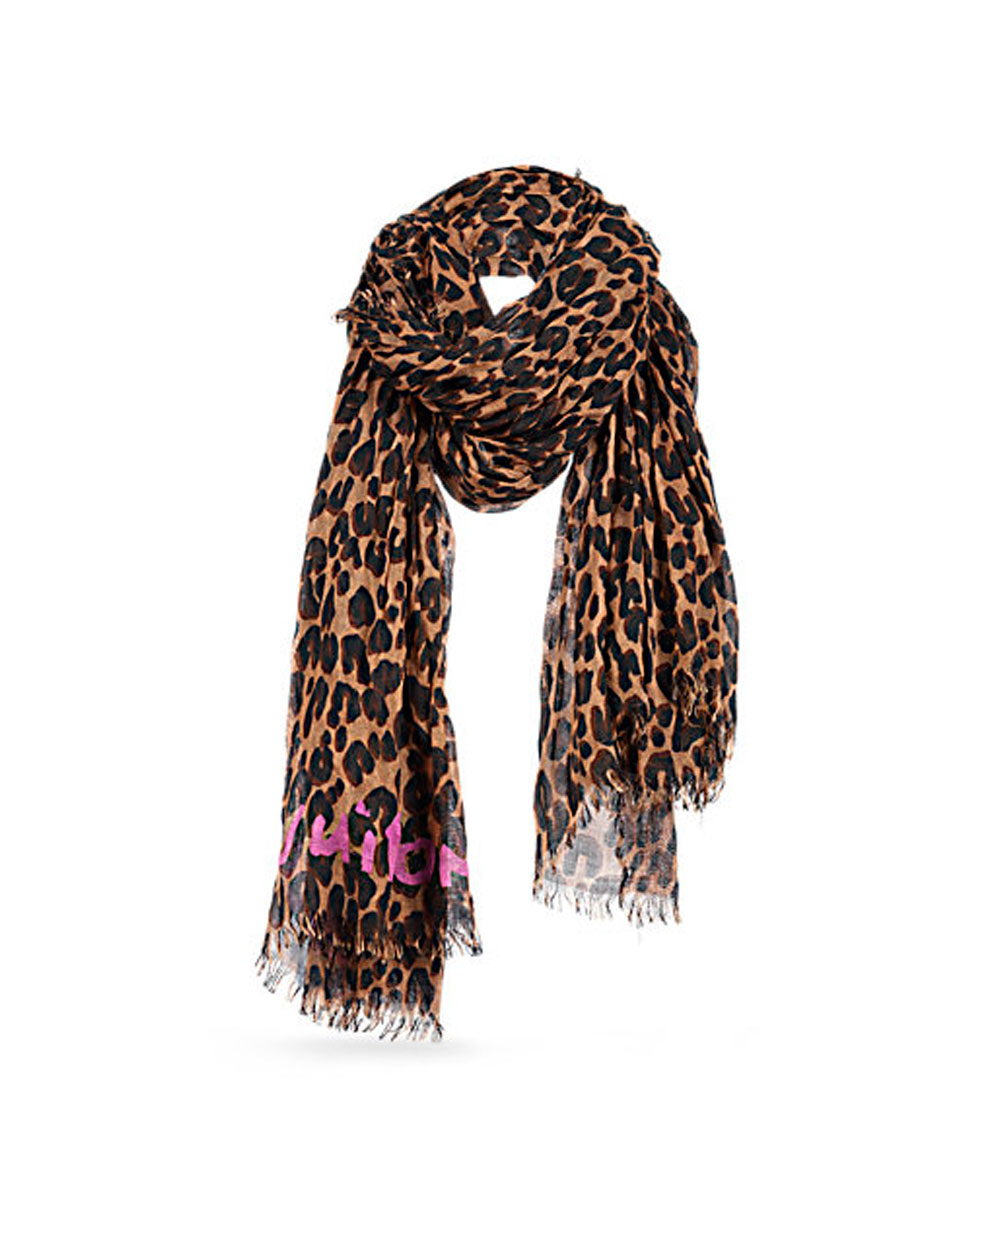 Louis Vuitton scarf.